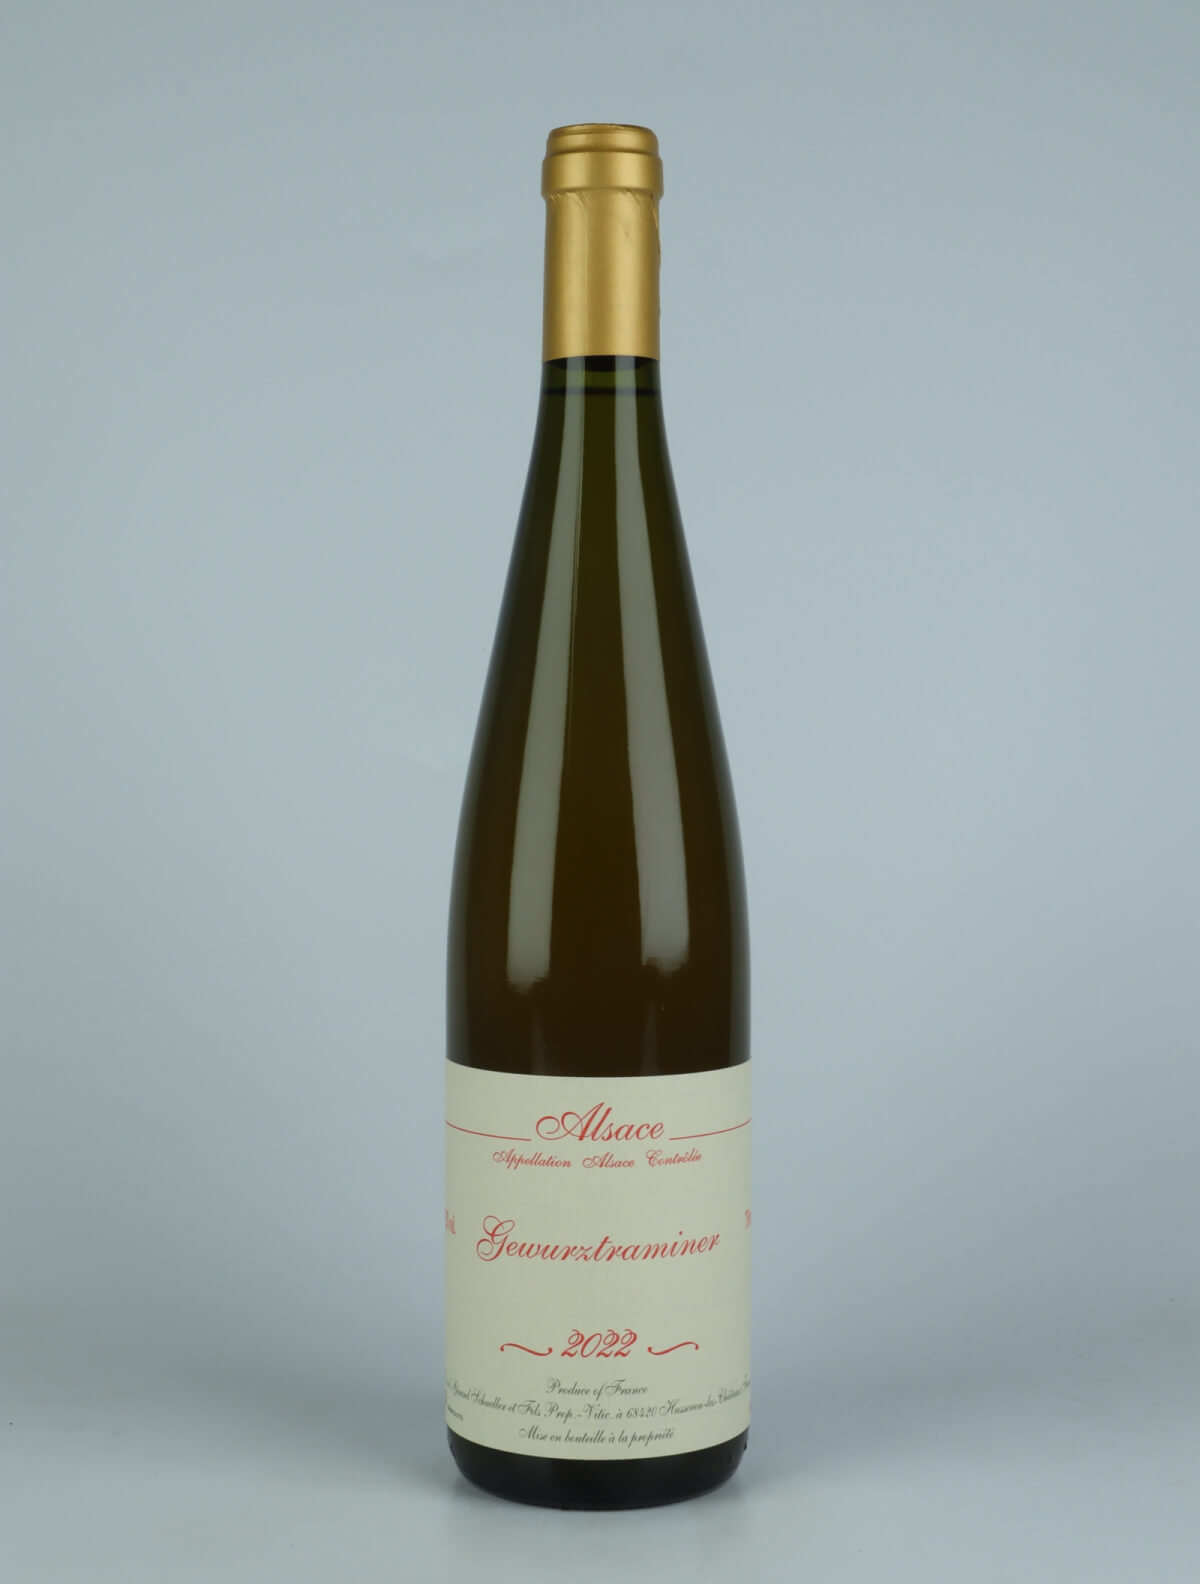 A bottle 2022 Gewürztraminer Cuvée Particulière White wine from Gérard Schueller, Alsace in France